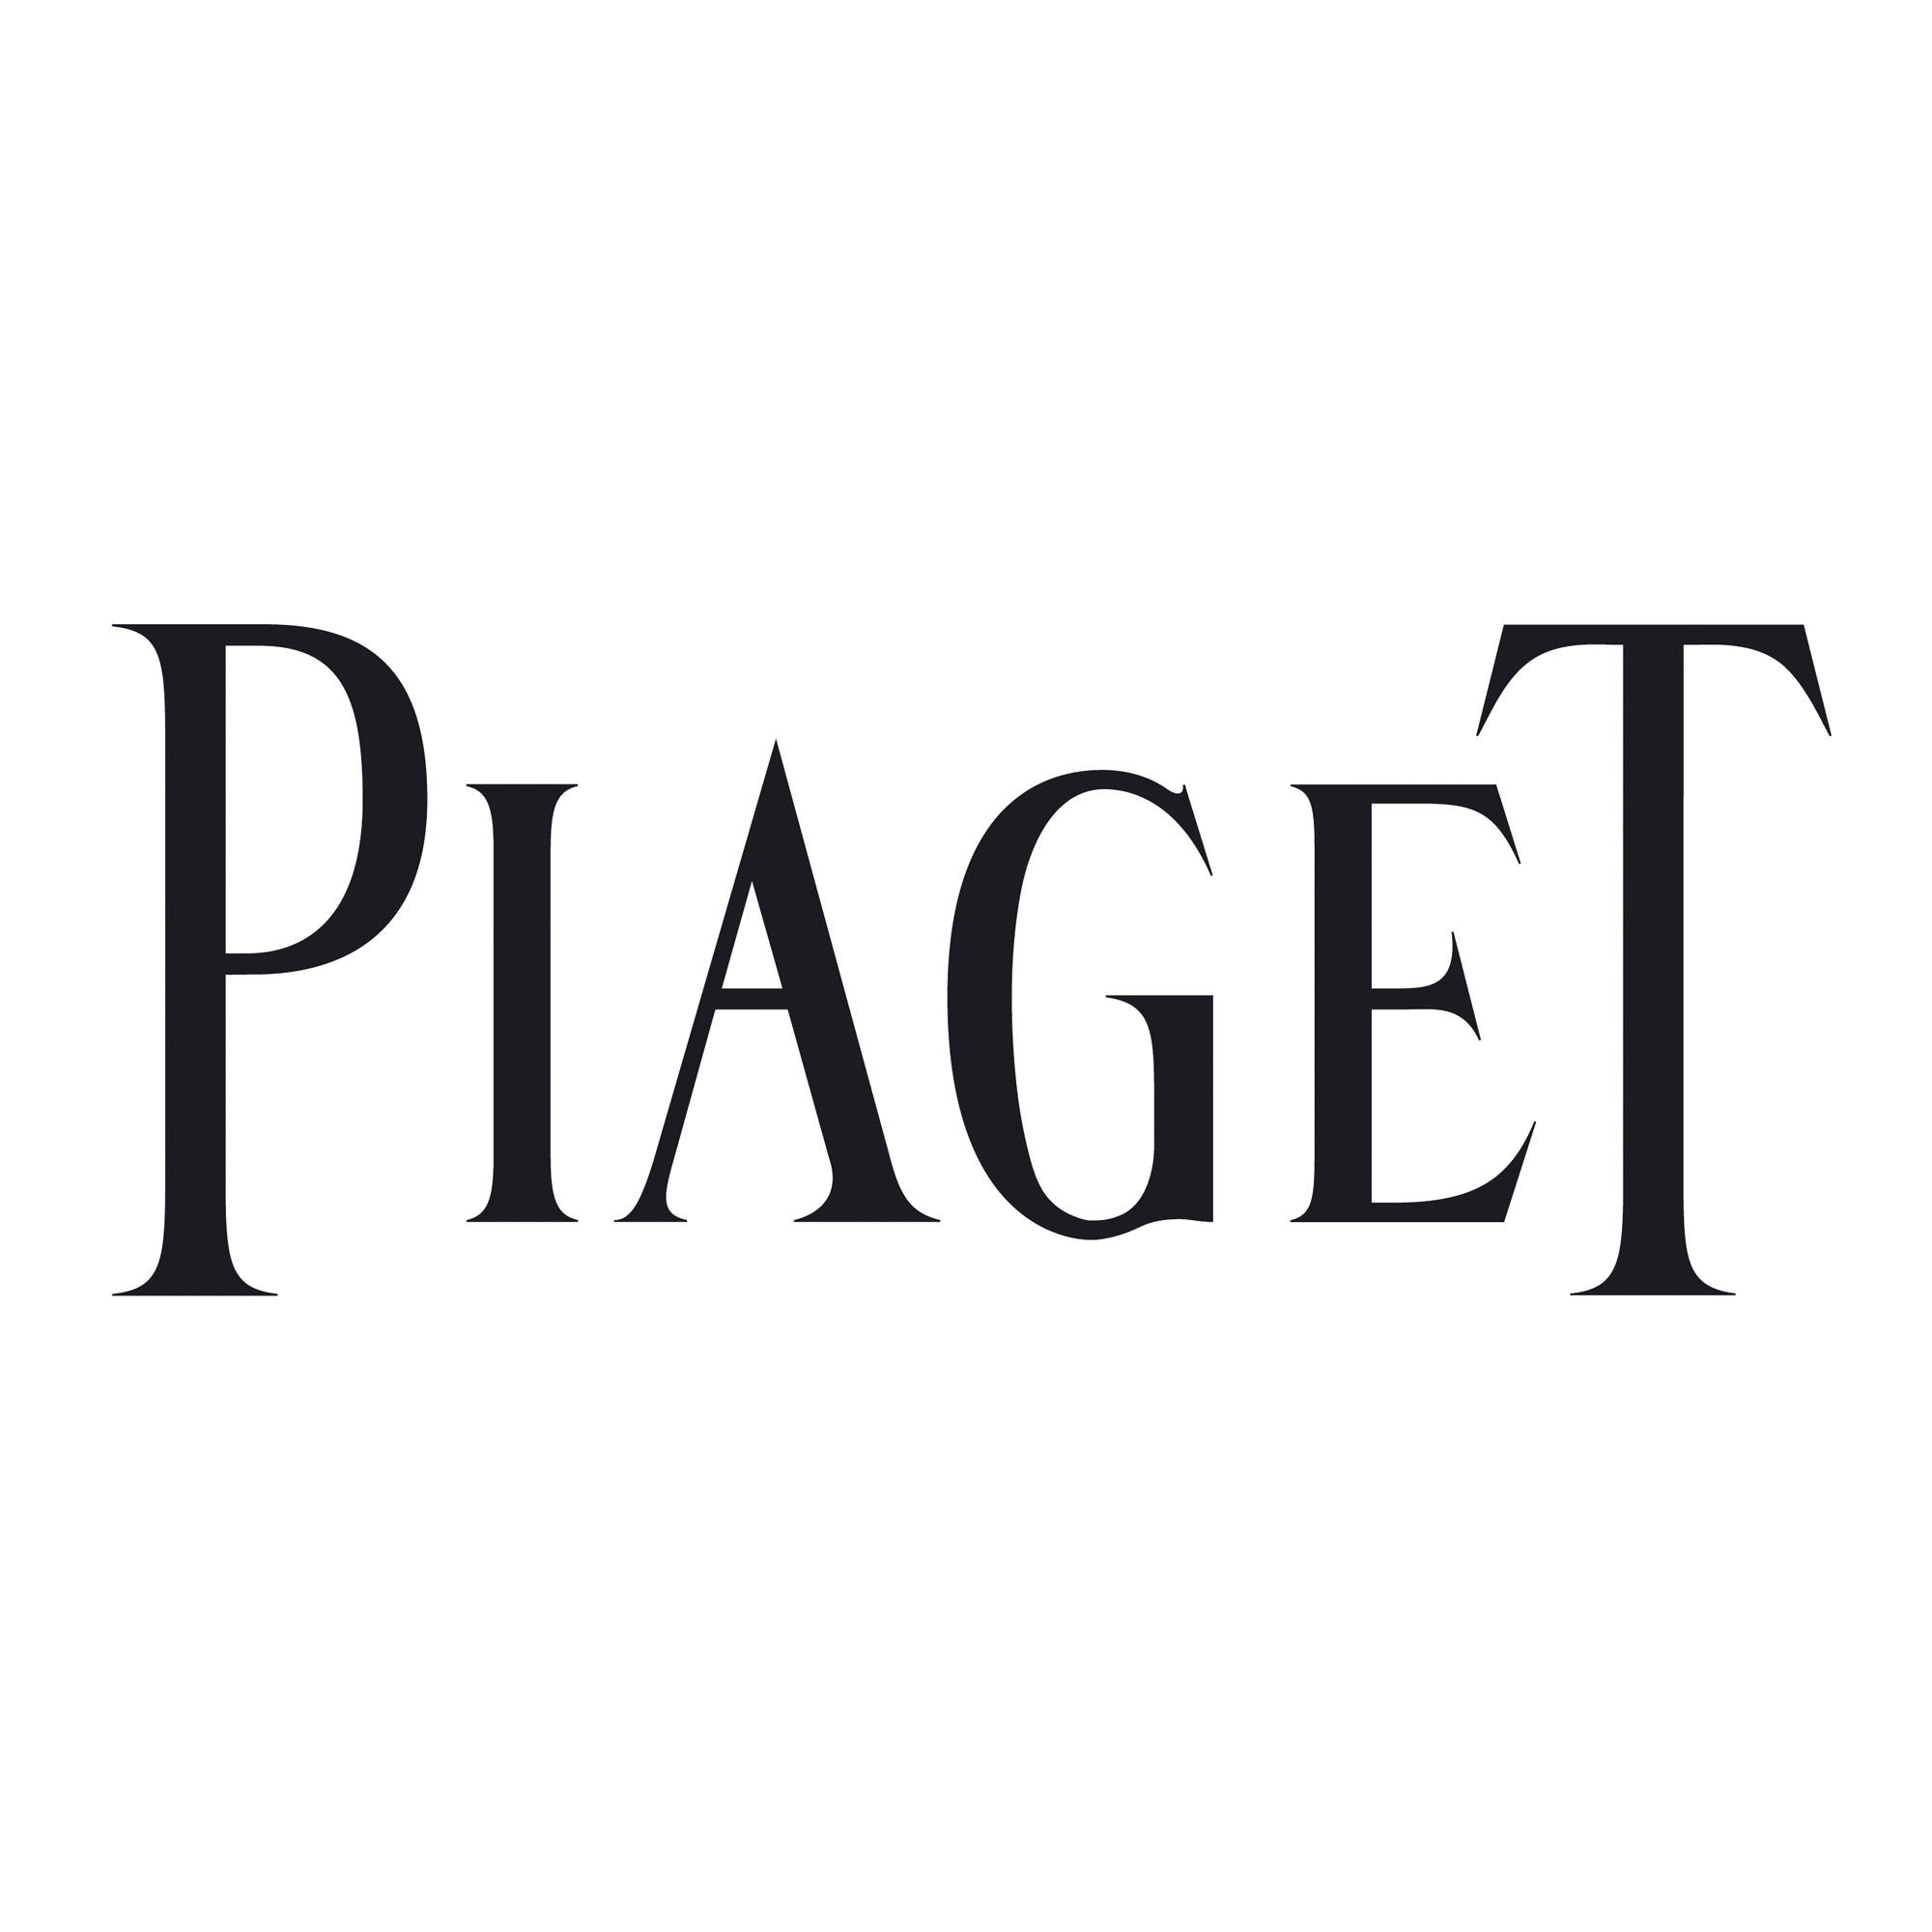 Piaget Boutique Madrid - El Corte Ingles Madrid